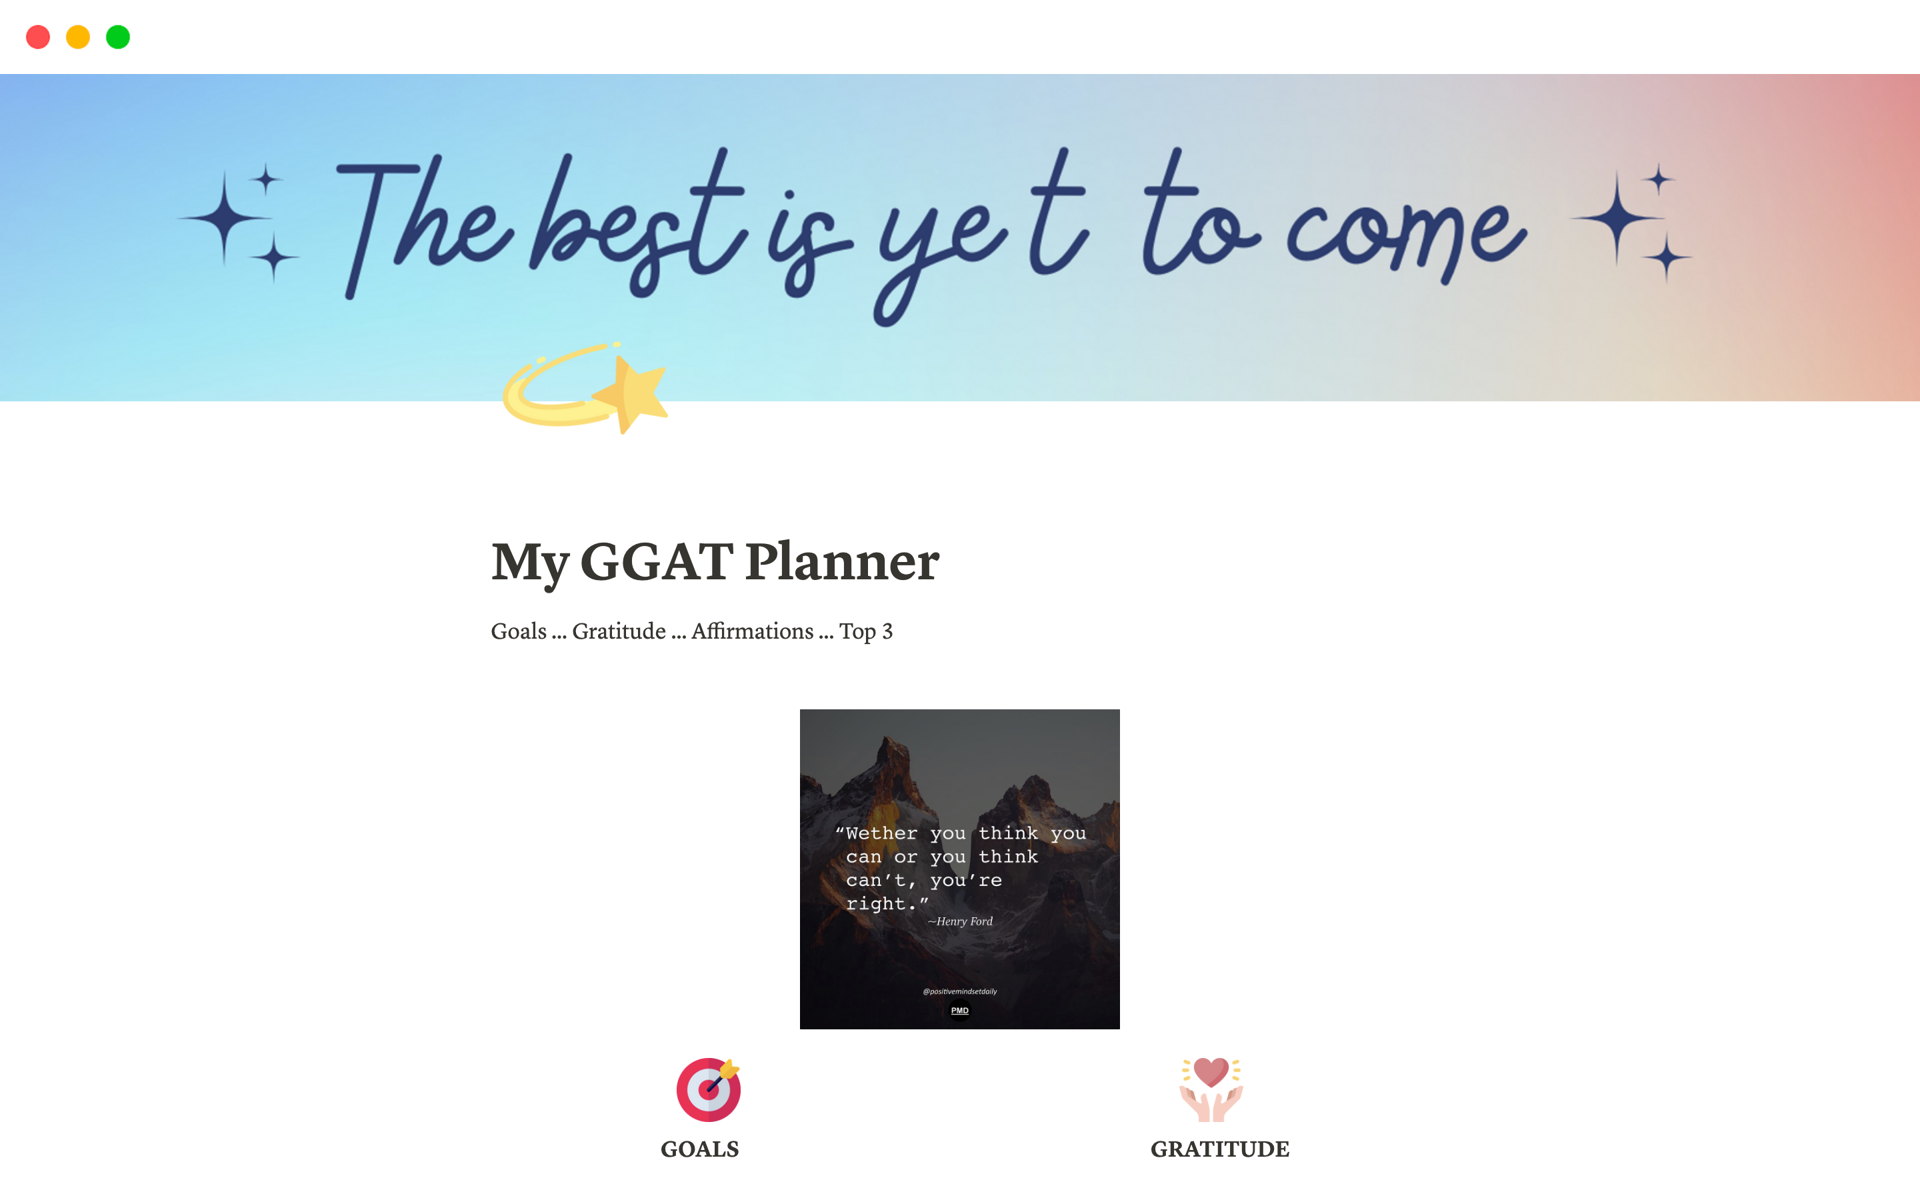 Vista previa de plantilla para My GGAT Planner